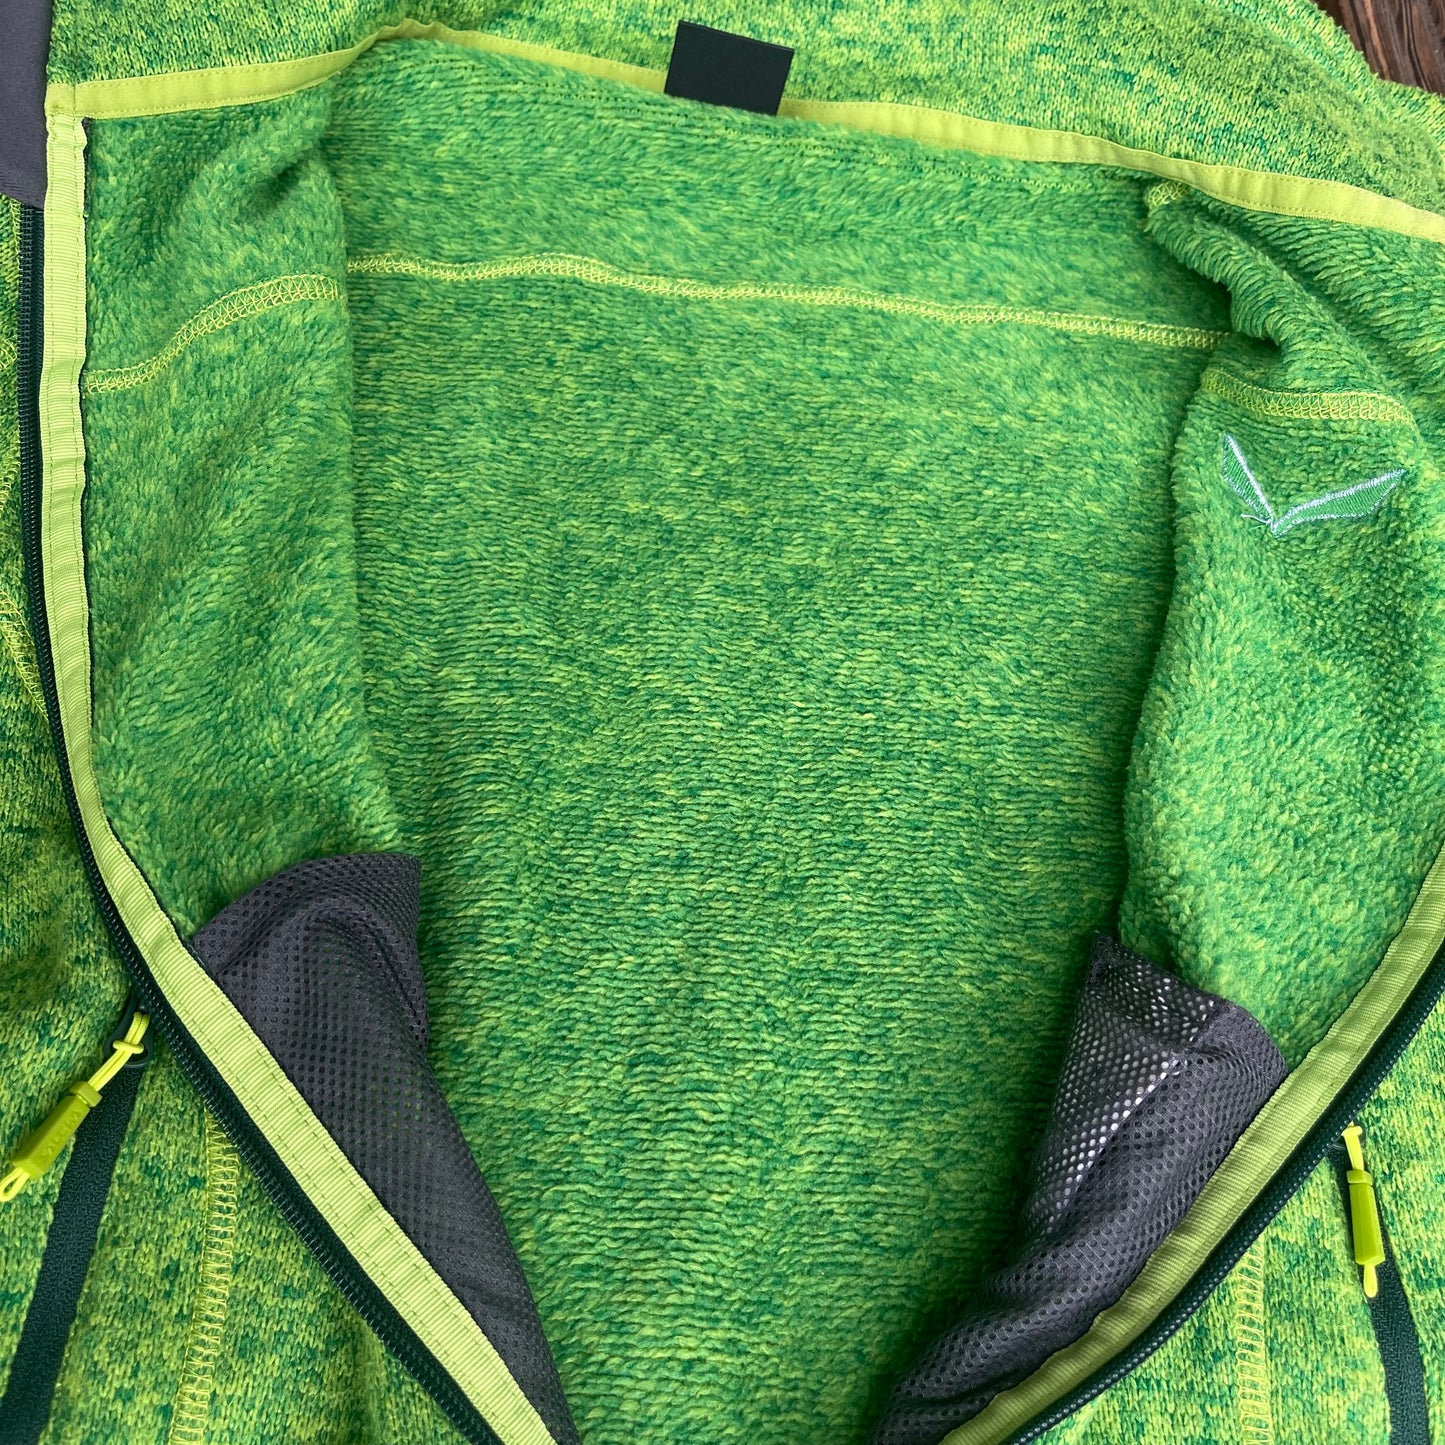 Fleece- Jacke von Salewa M (Herren) Zipper Sweatshirt grün